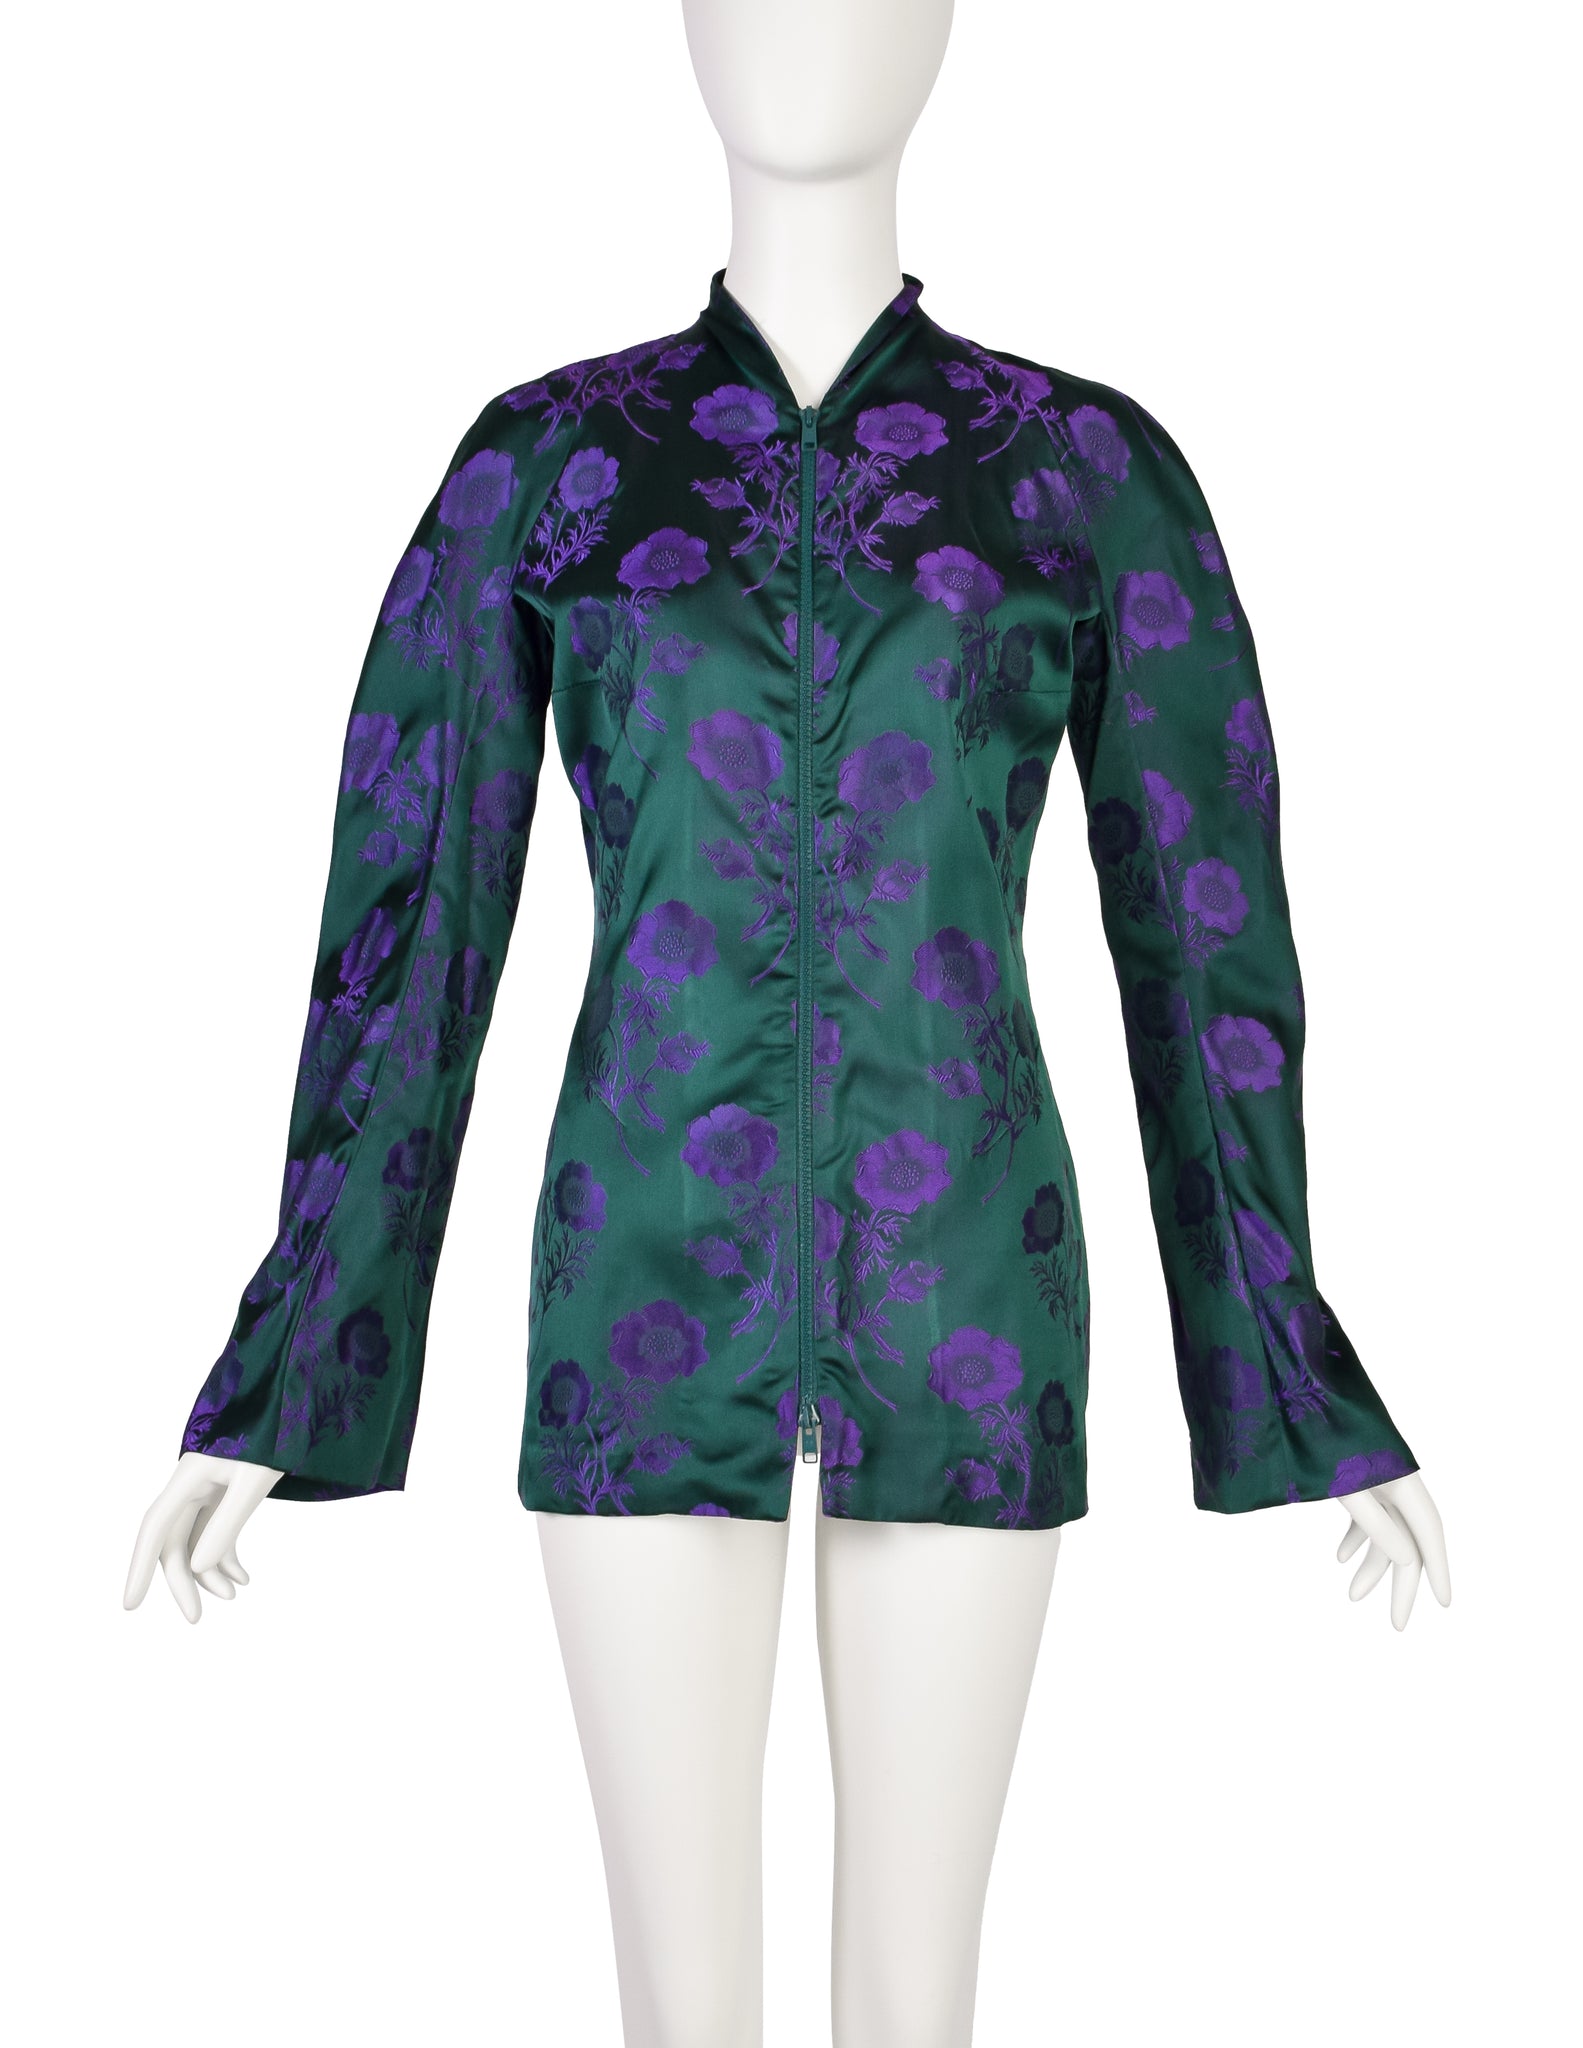 Callaghan by Scott Crolla Vintage SS 1997 Green Purple Floral Brocade Silk Satin Jacket